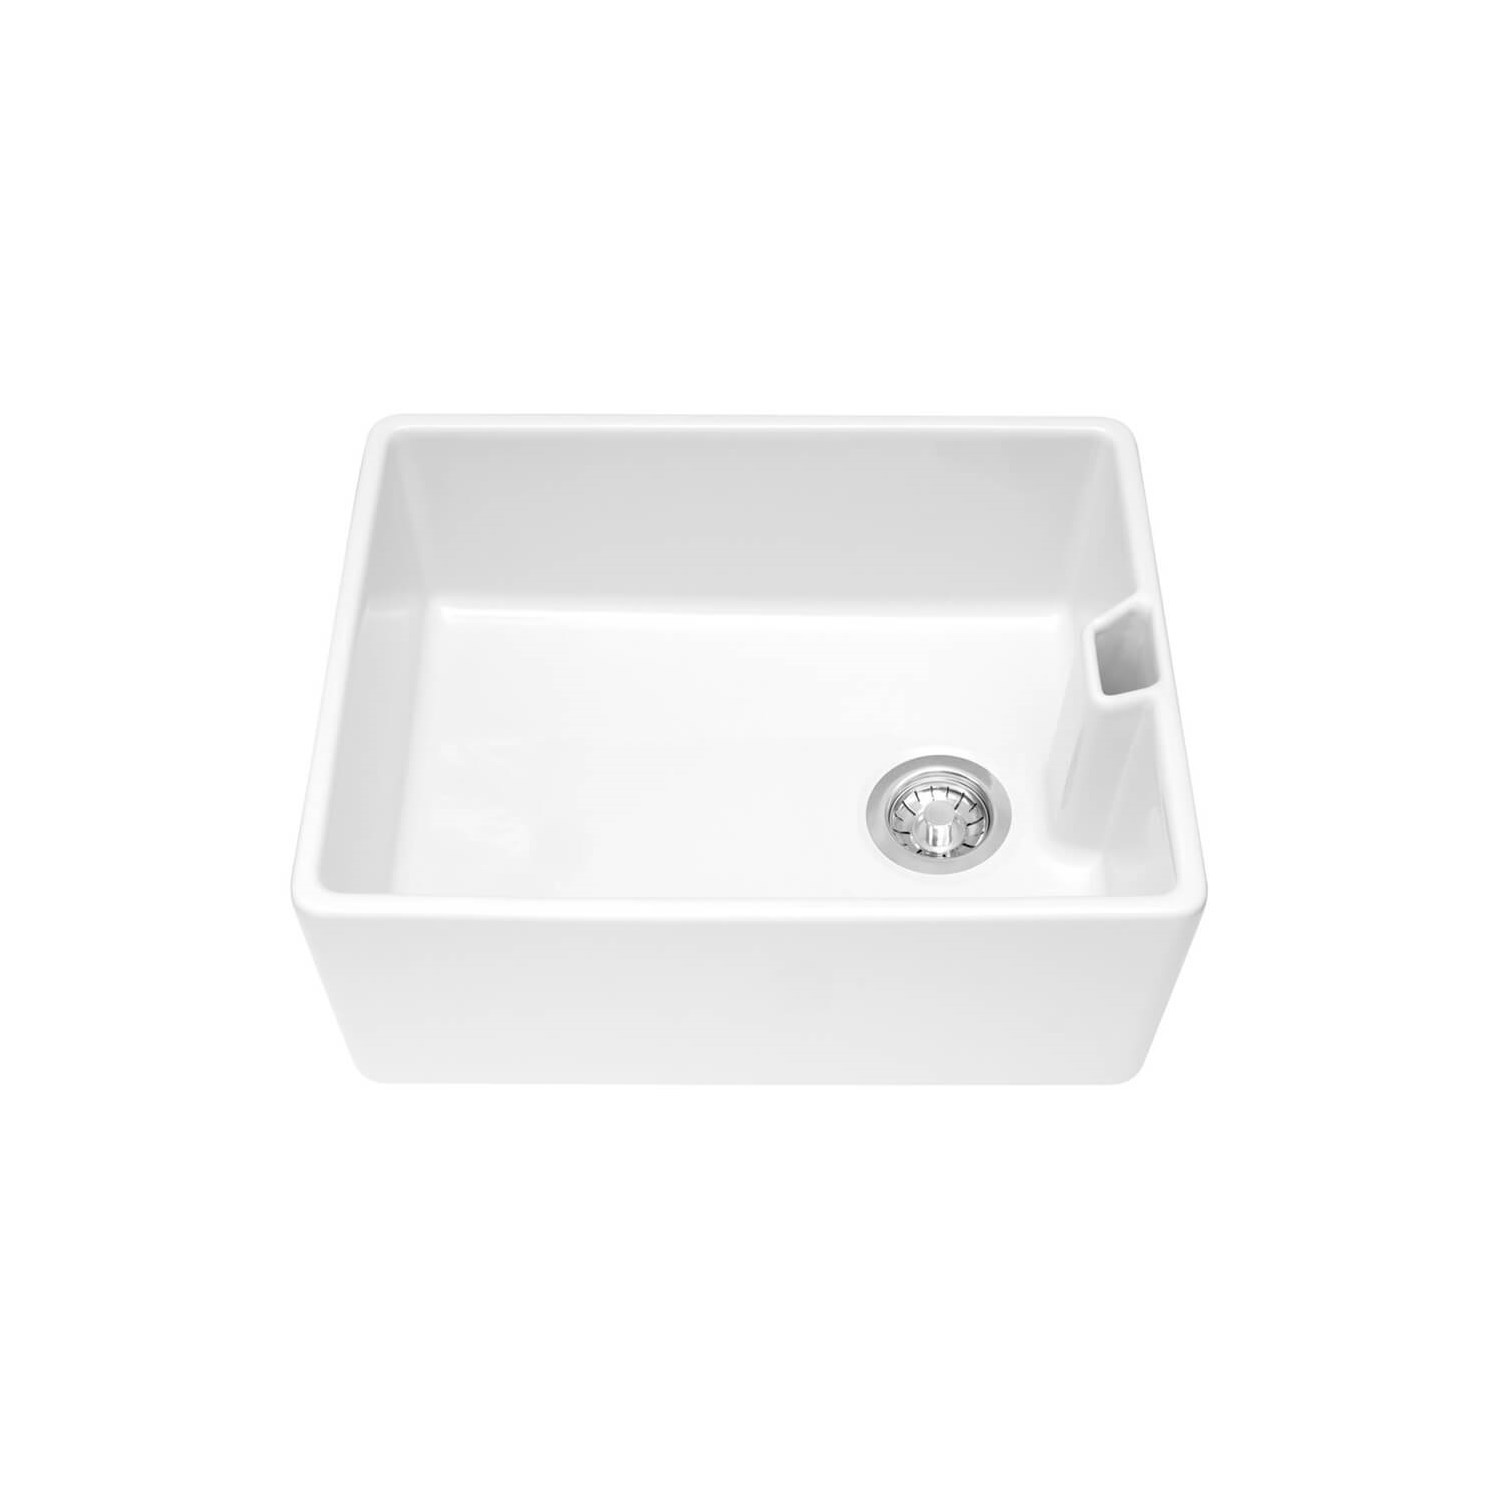 Caple Single Bowl White Ceramic Belfast Sink with Weir Overflow - 595 x 455mm